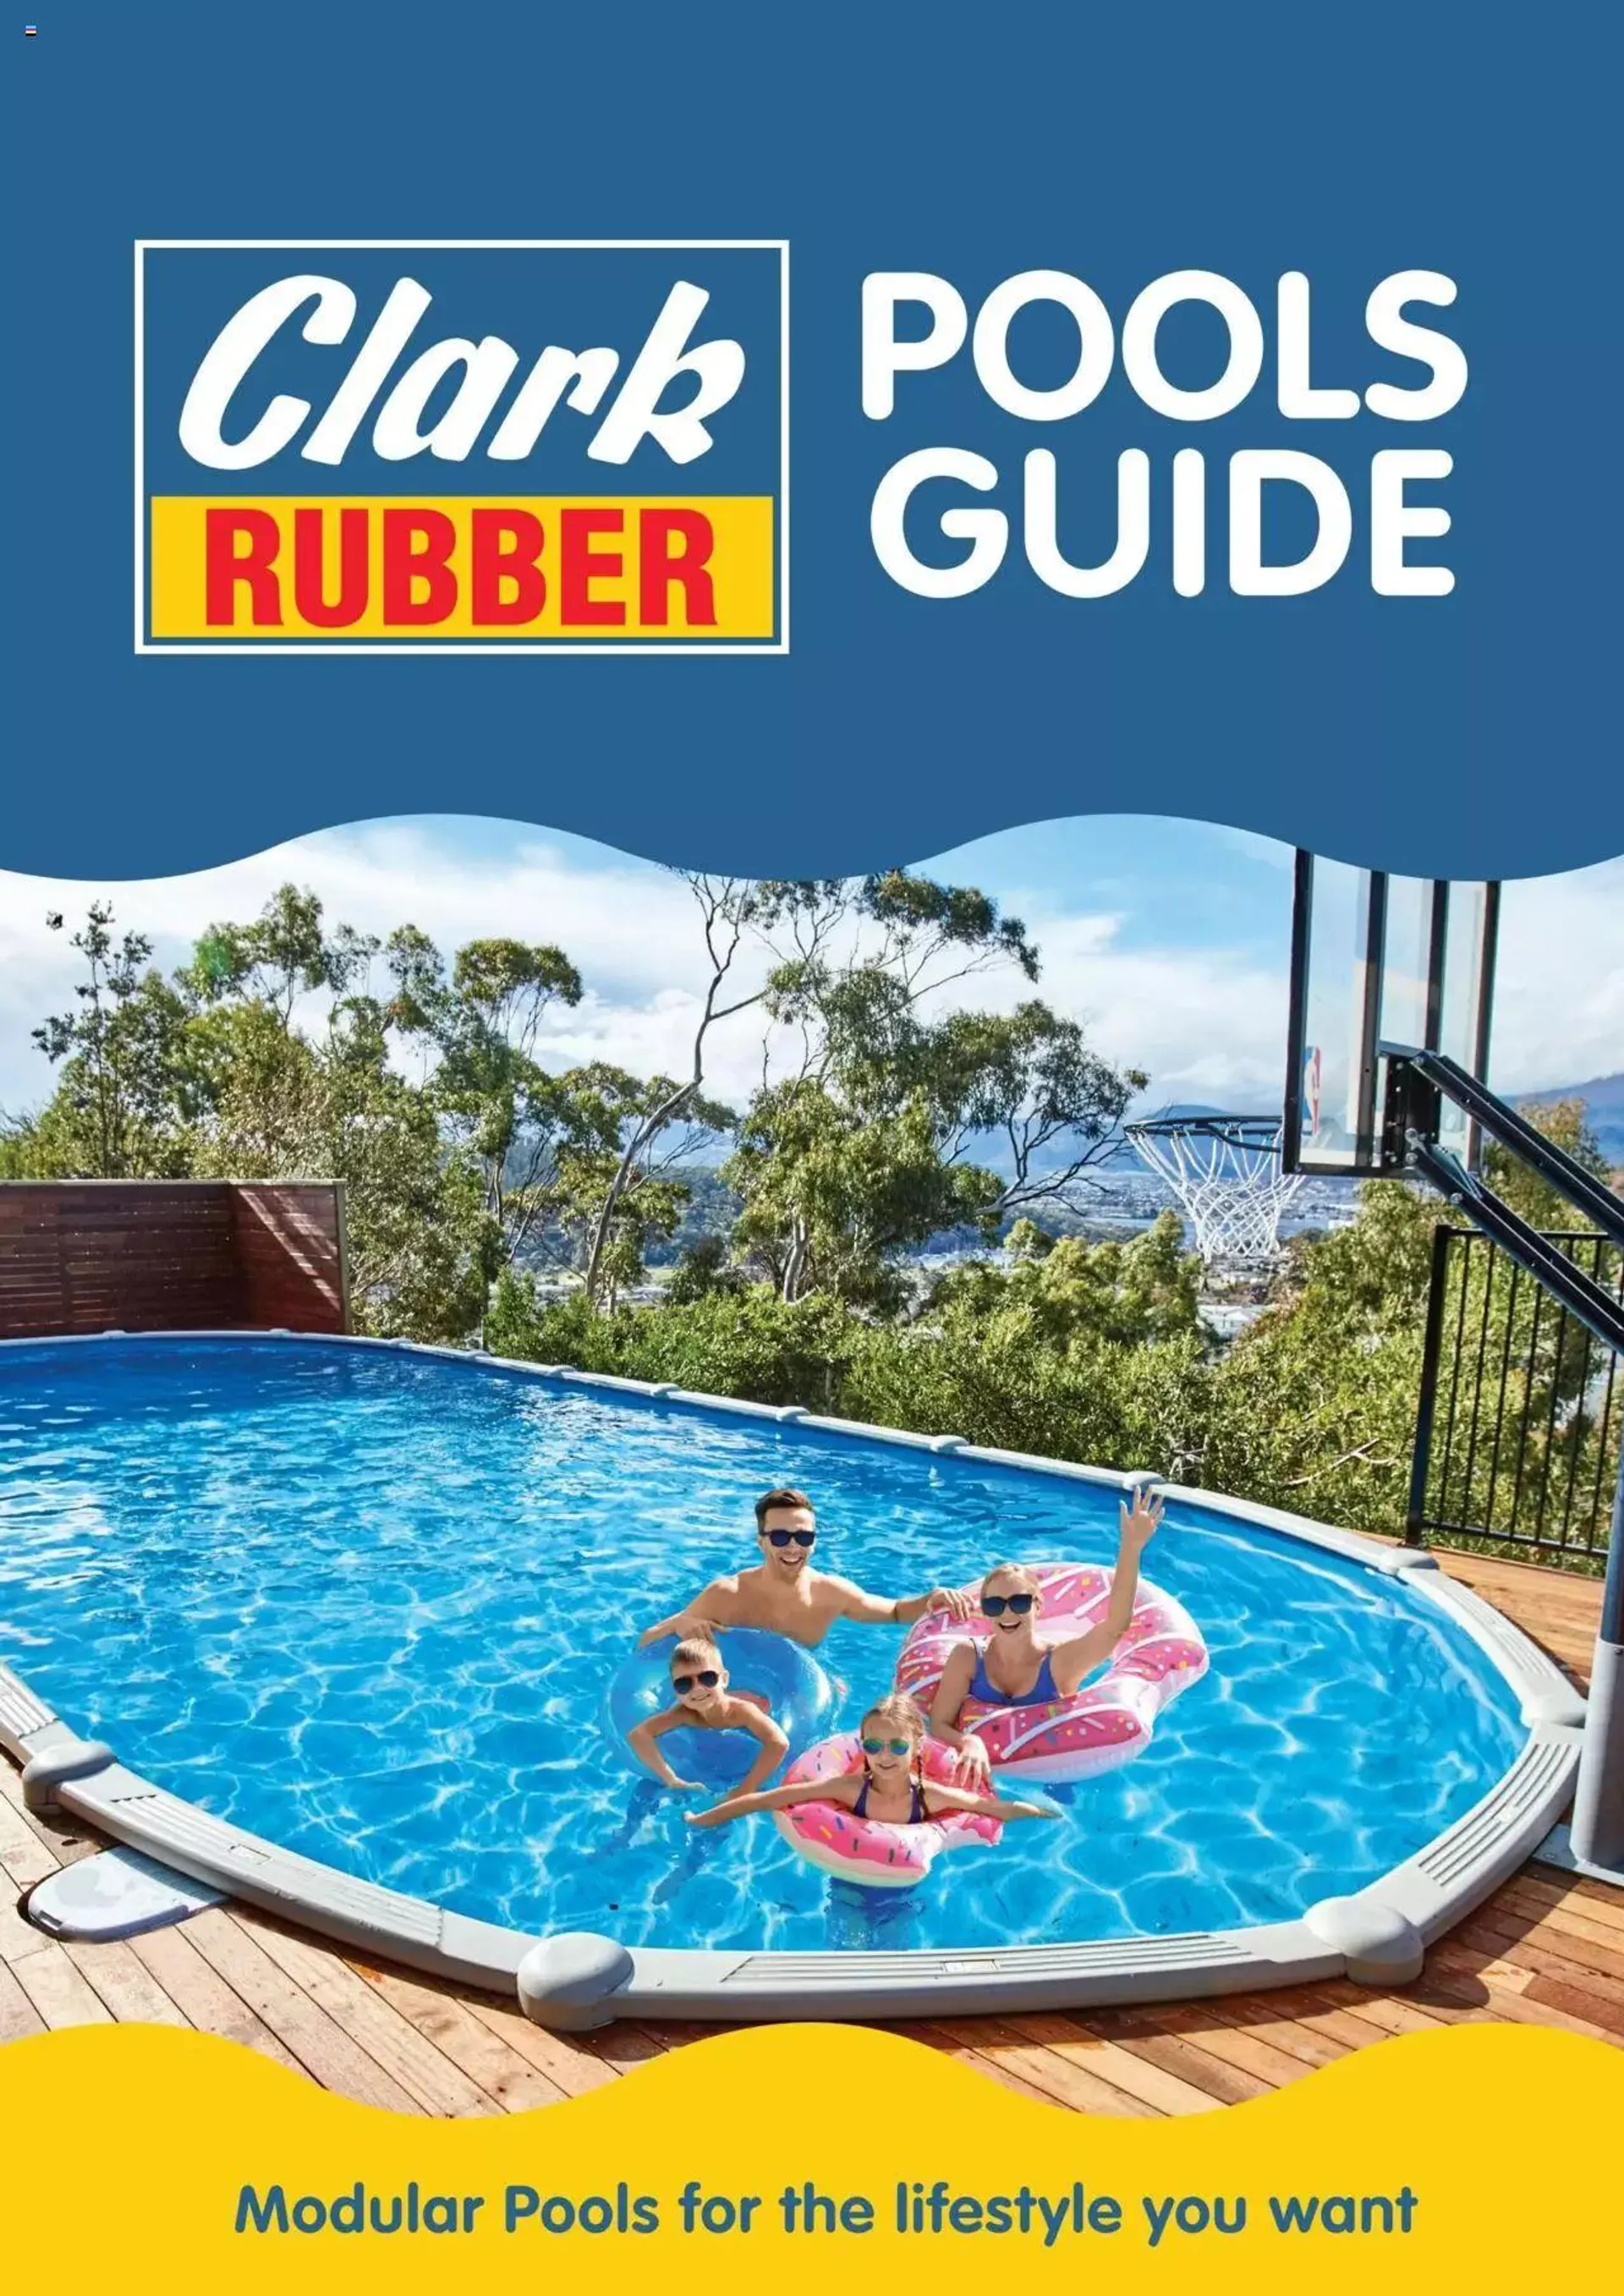 Clark Rubber Pool Guide - 0